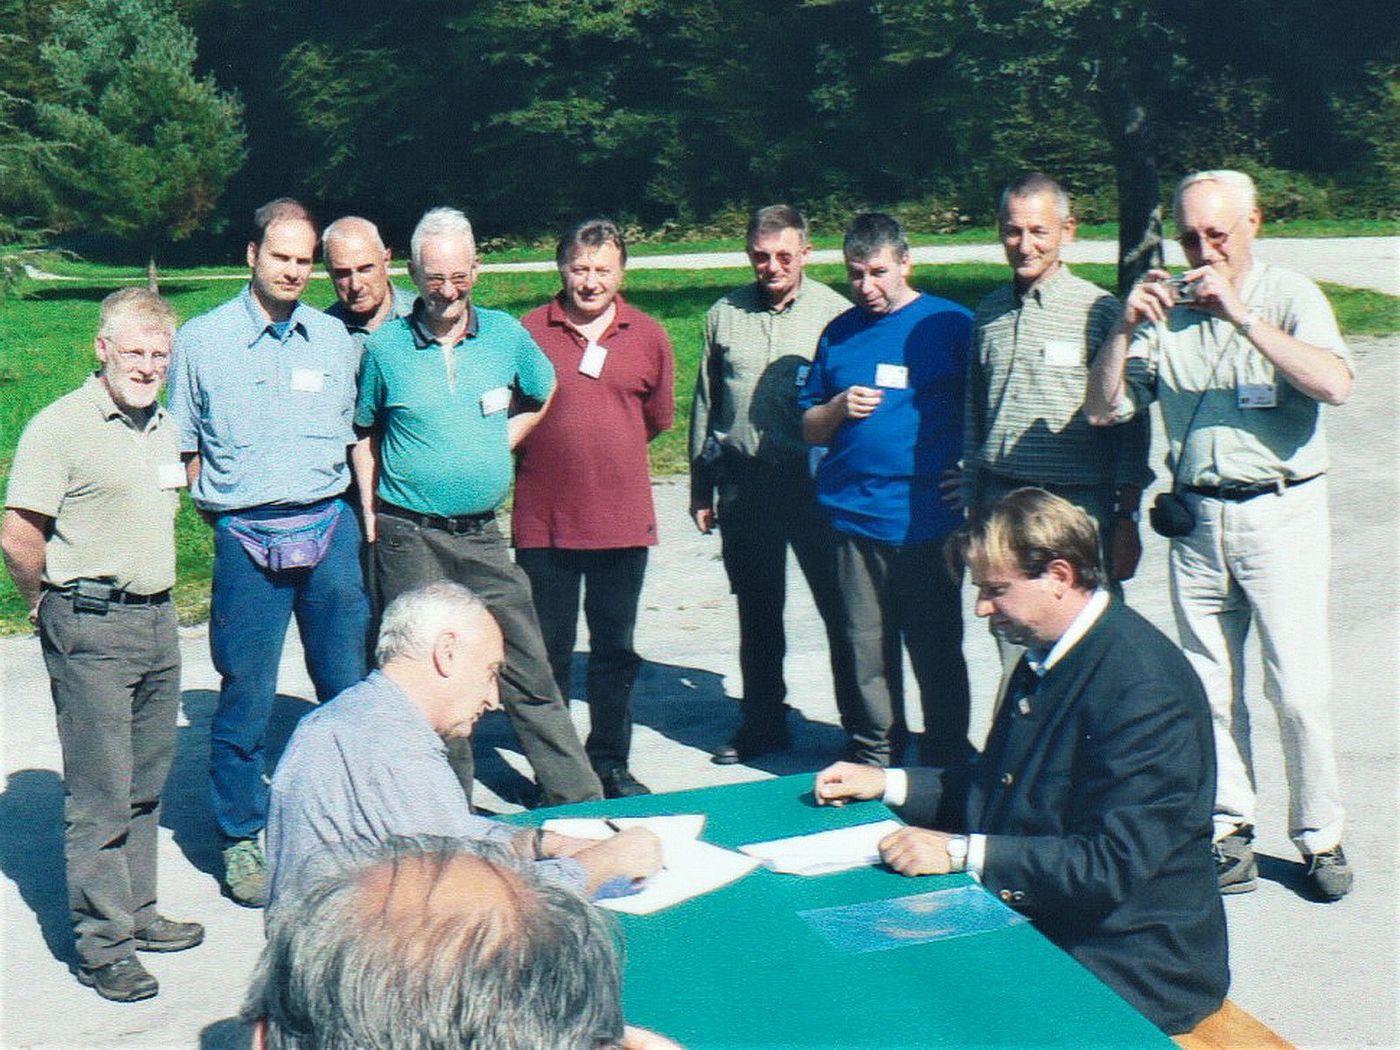 Registration in Namur